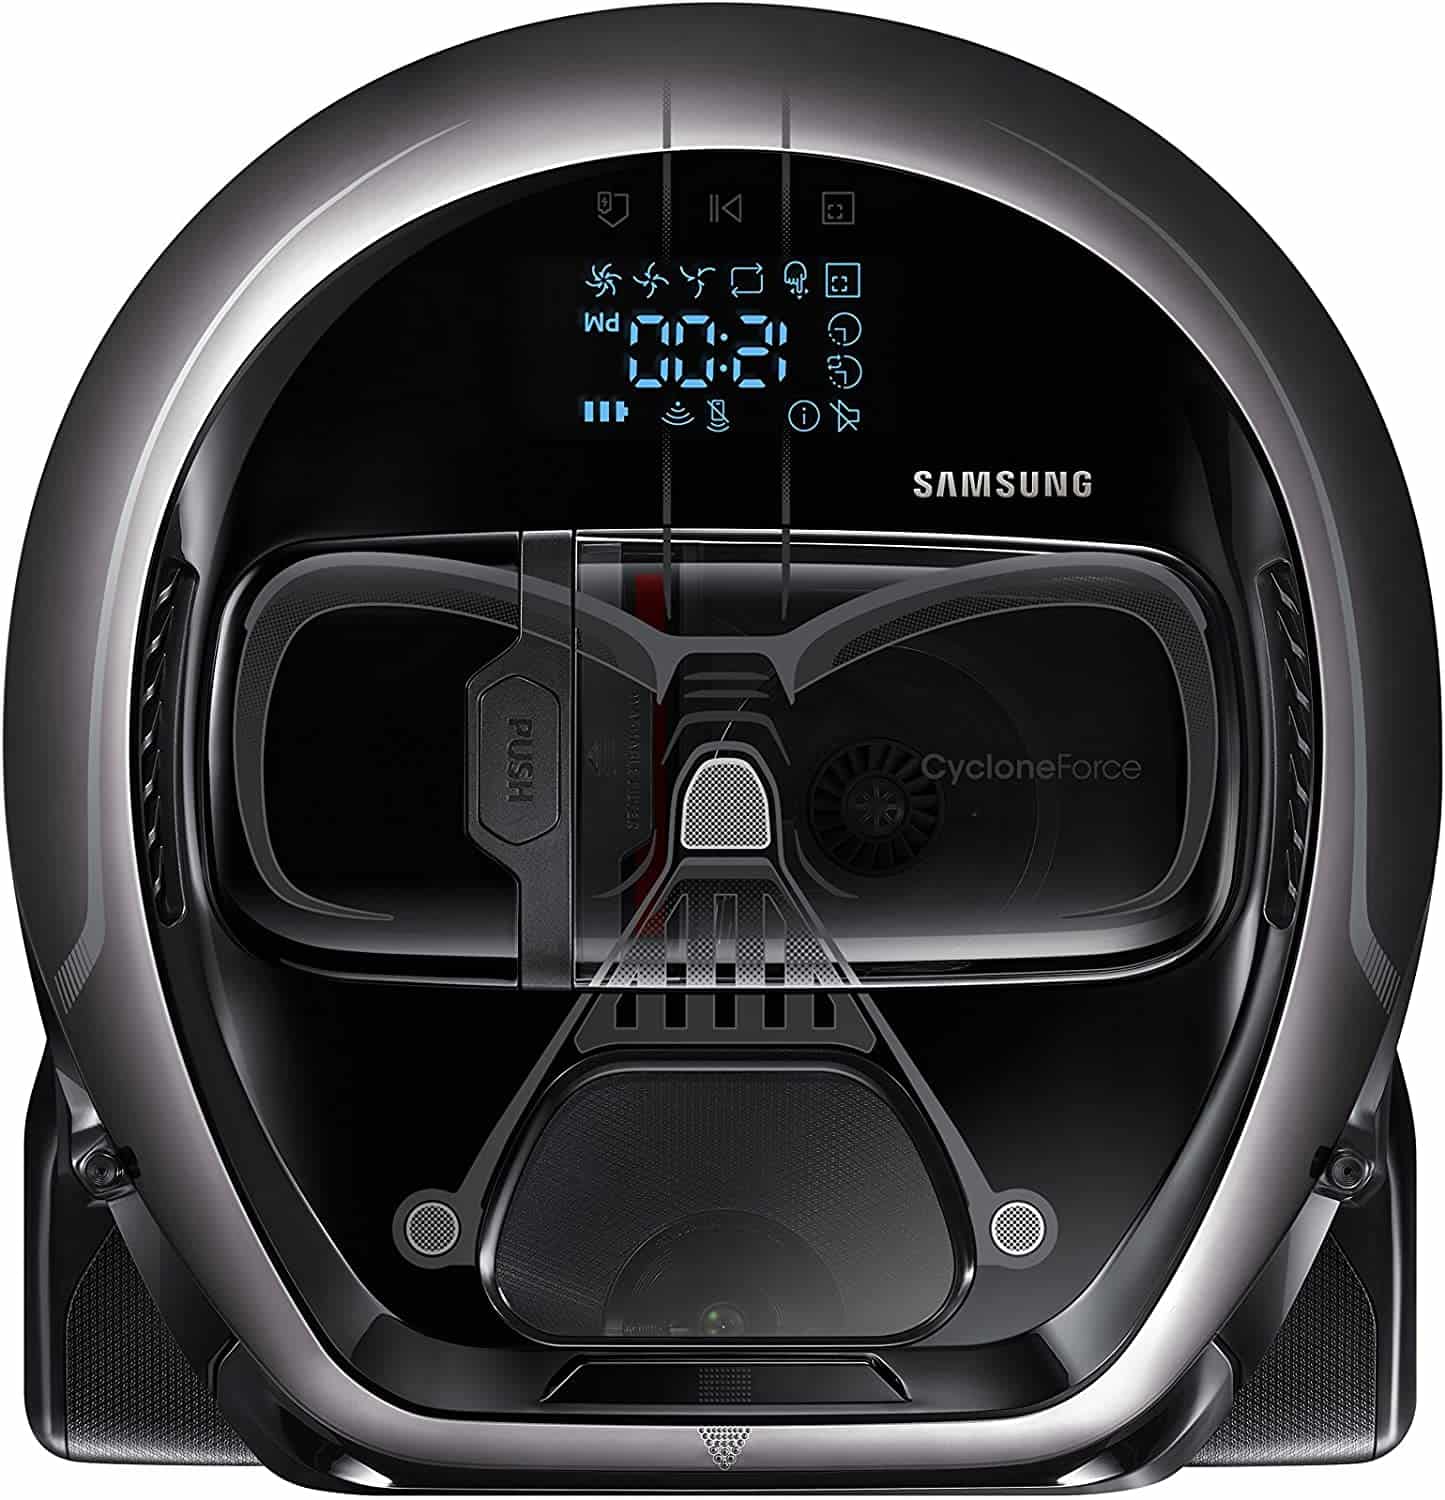 Cool Star Wars Droid vakuum: Samsung POWERbot Limited Edition